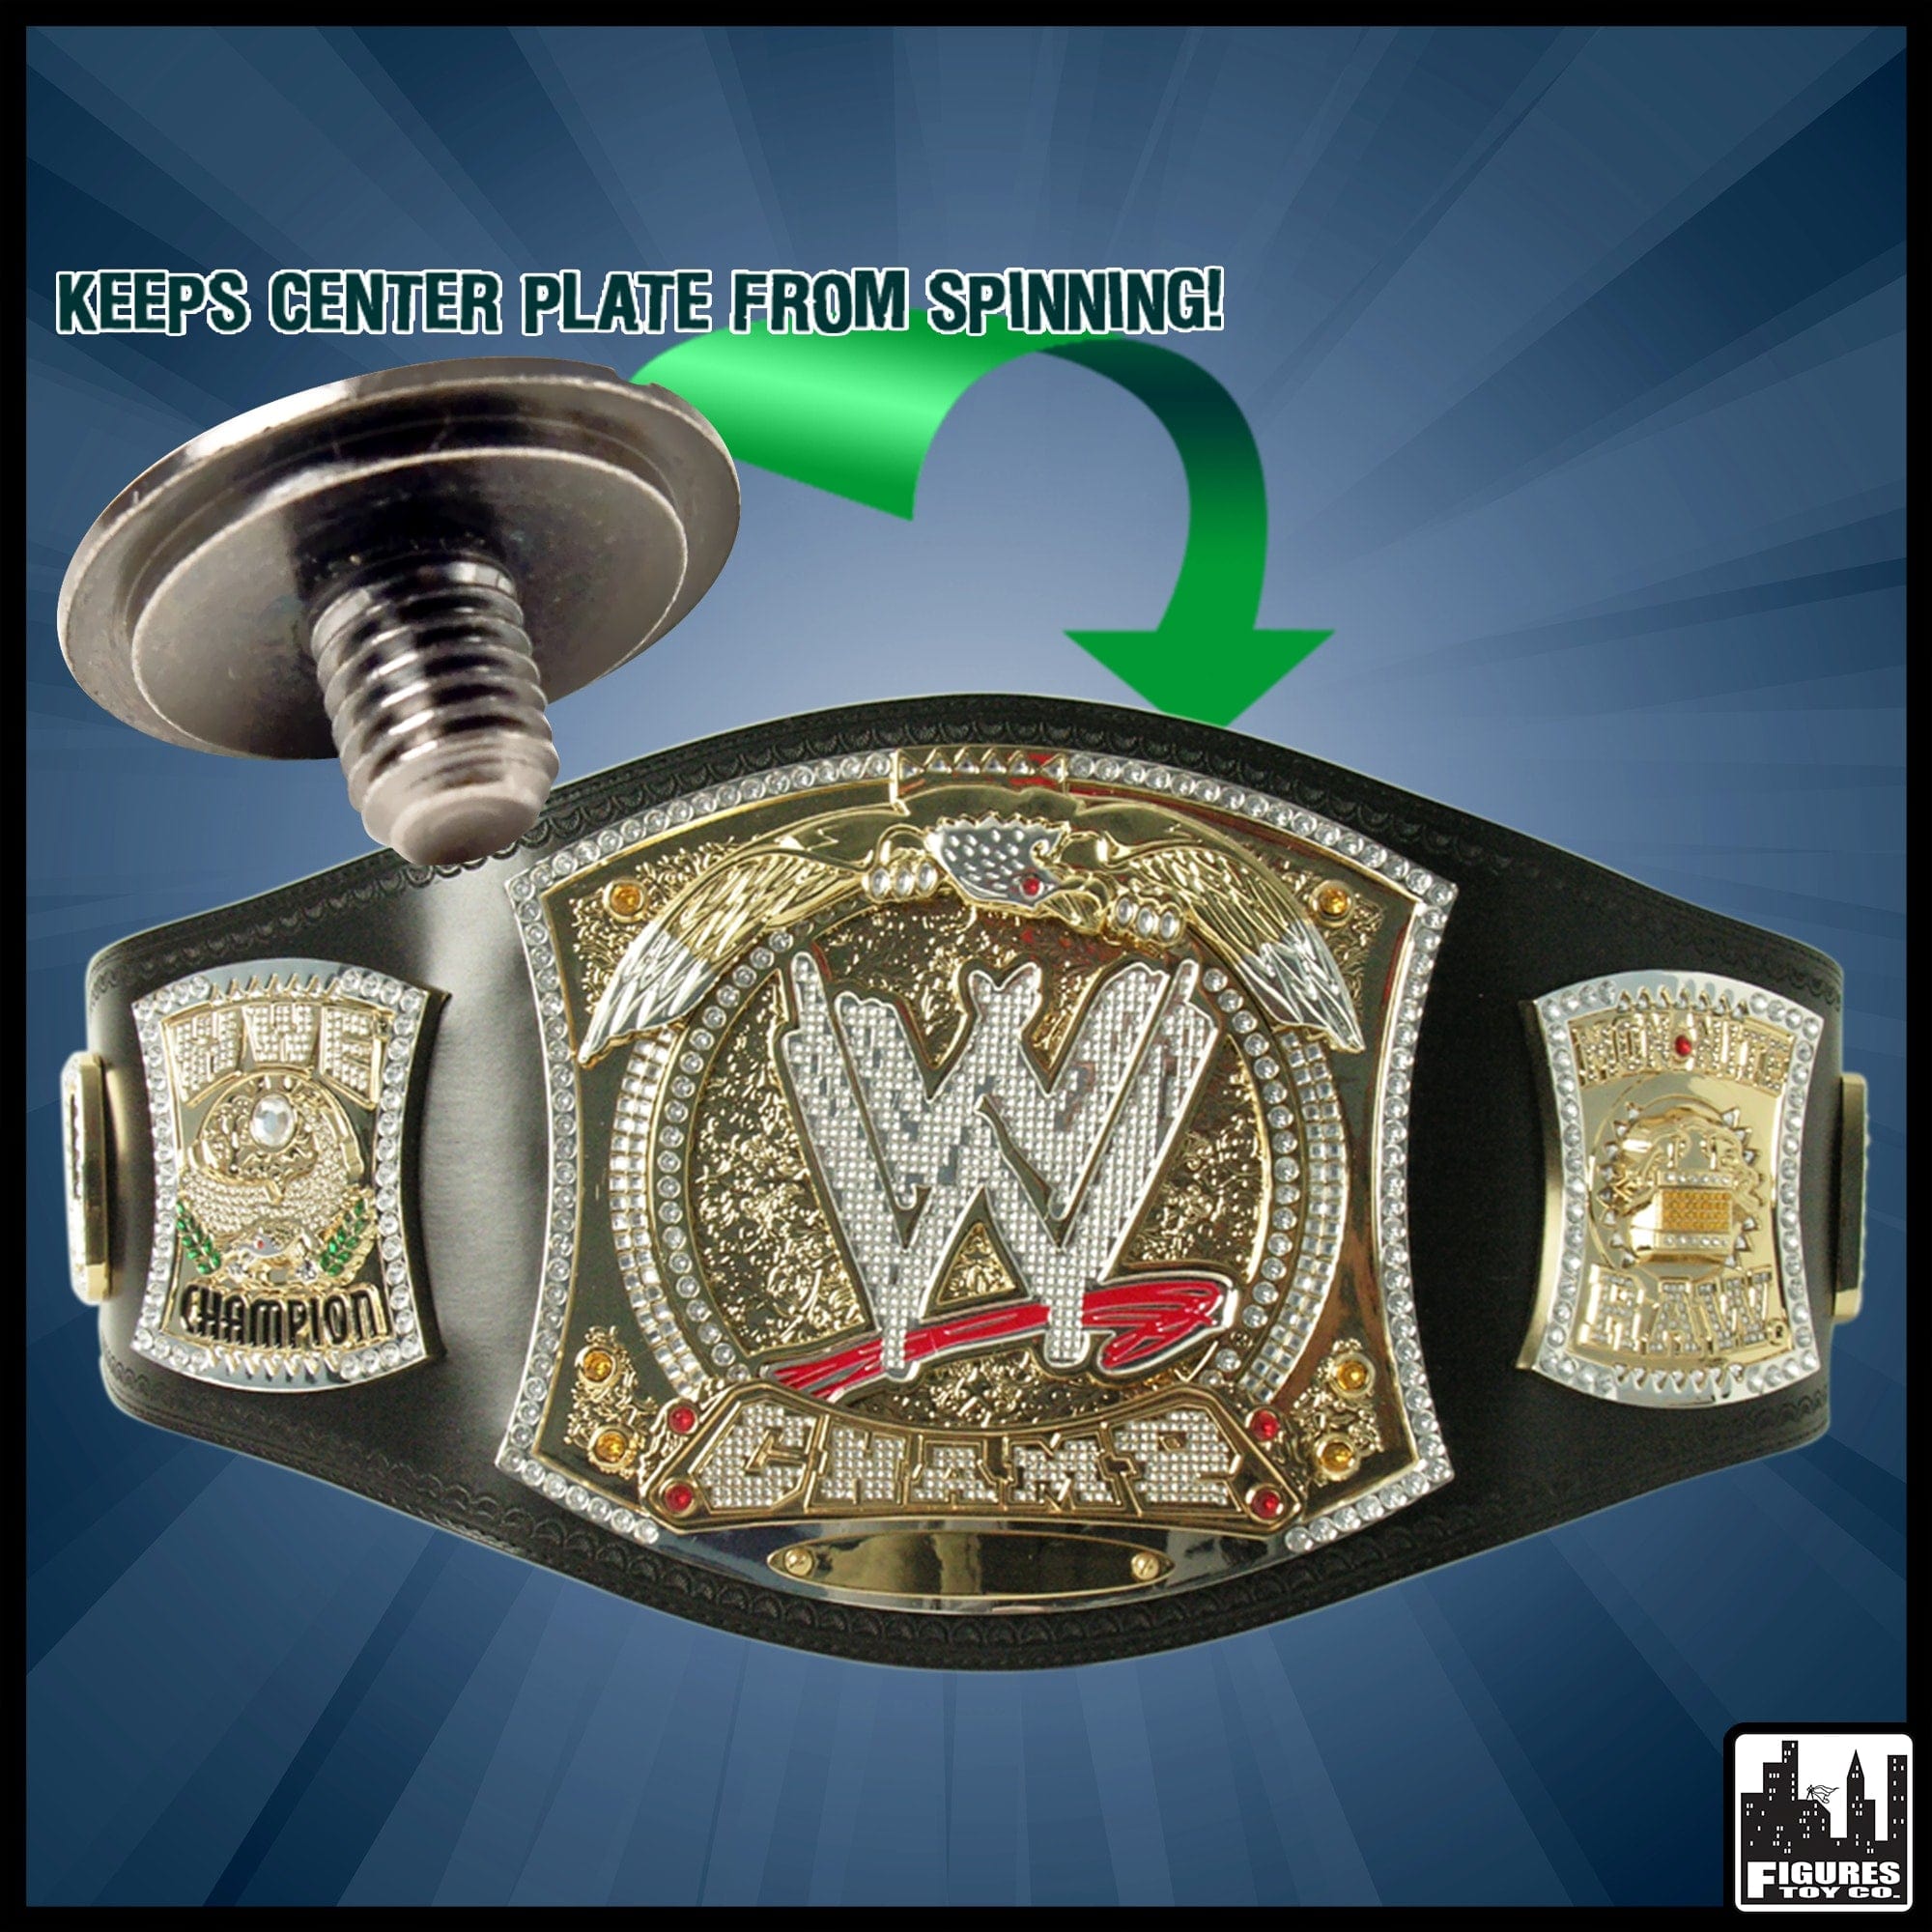 wwe world heavyweight championship belt replica